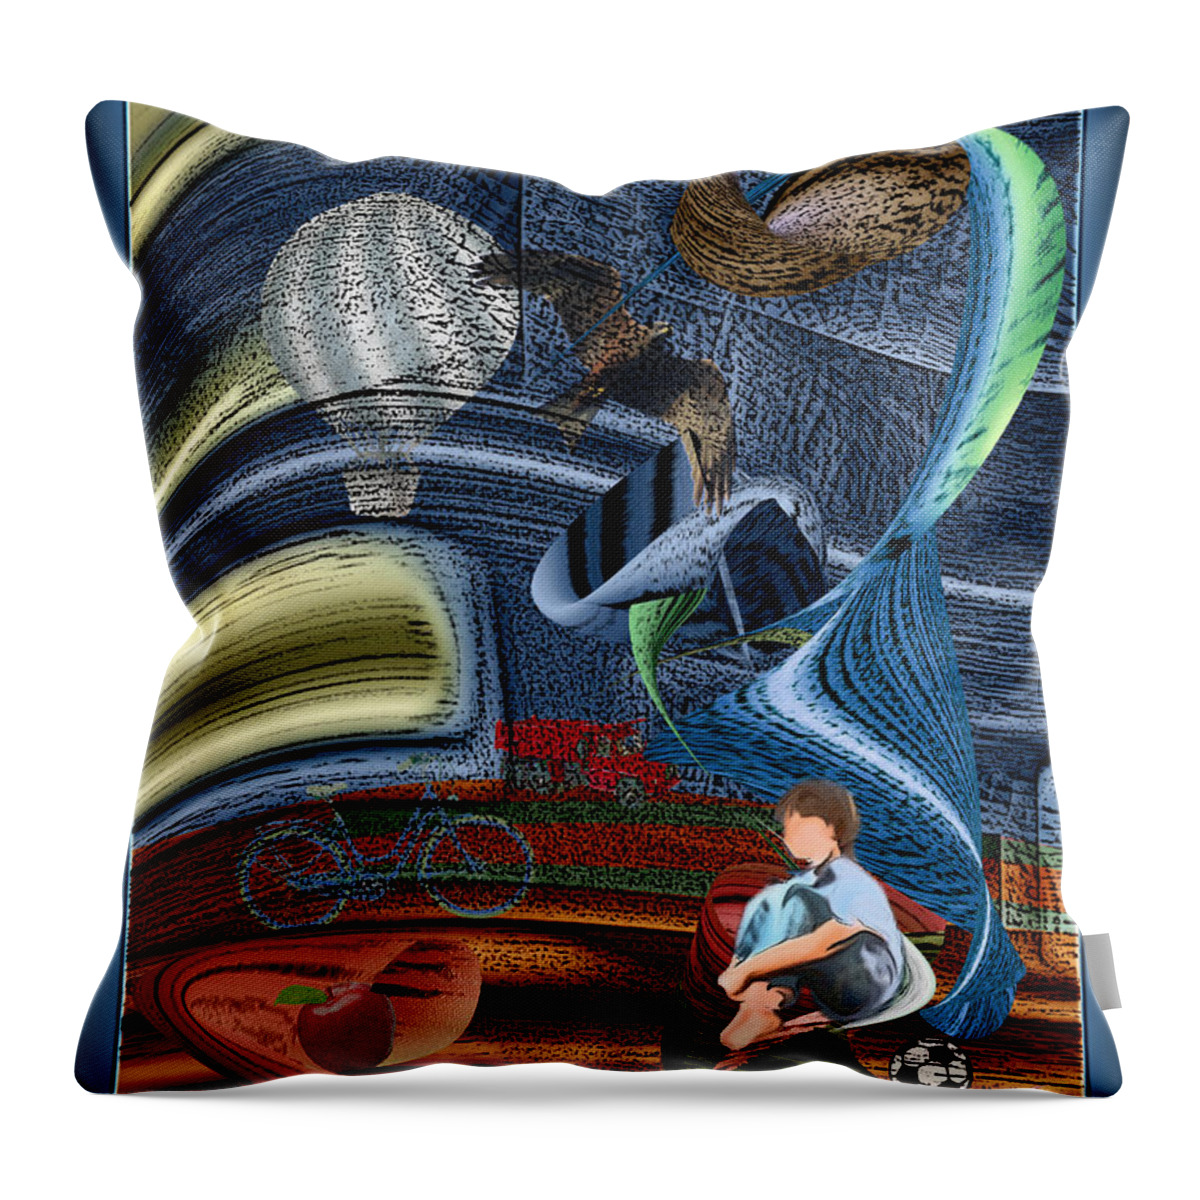 Boy Throw Pillow featuring the digital art The Boy by Leo Symon